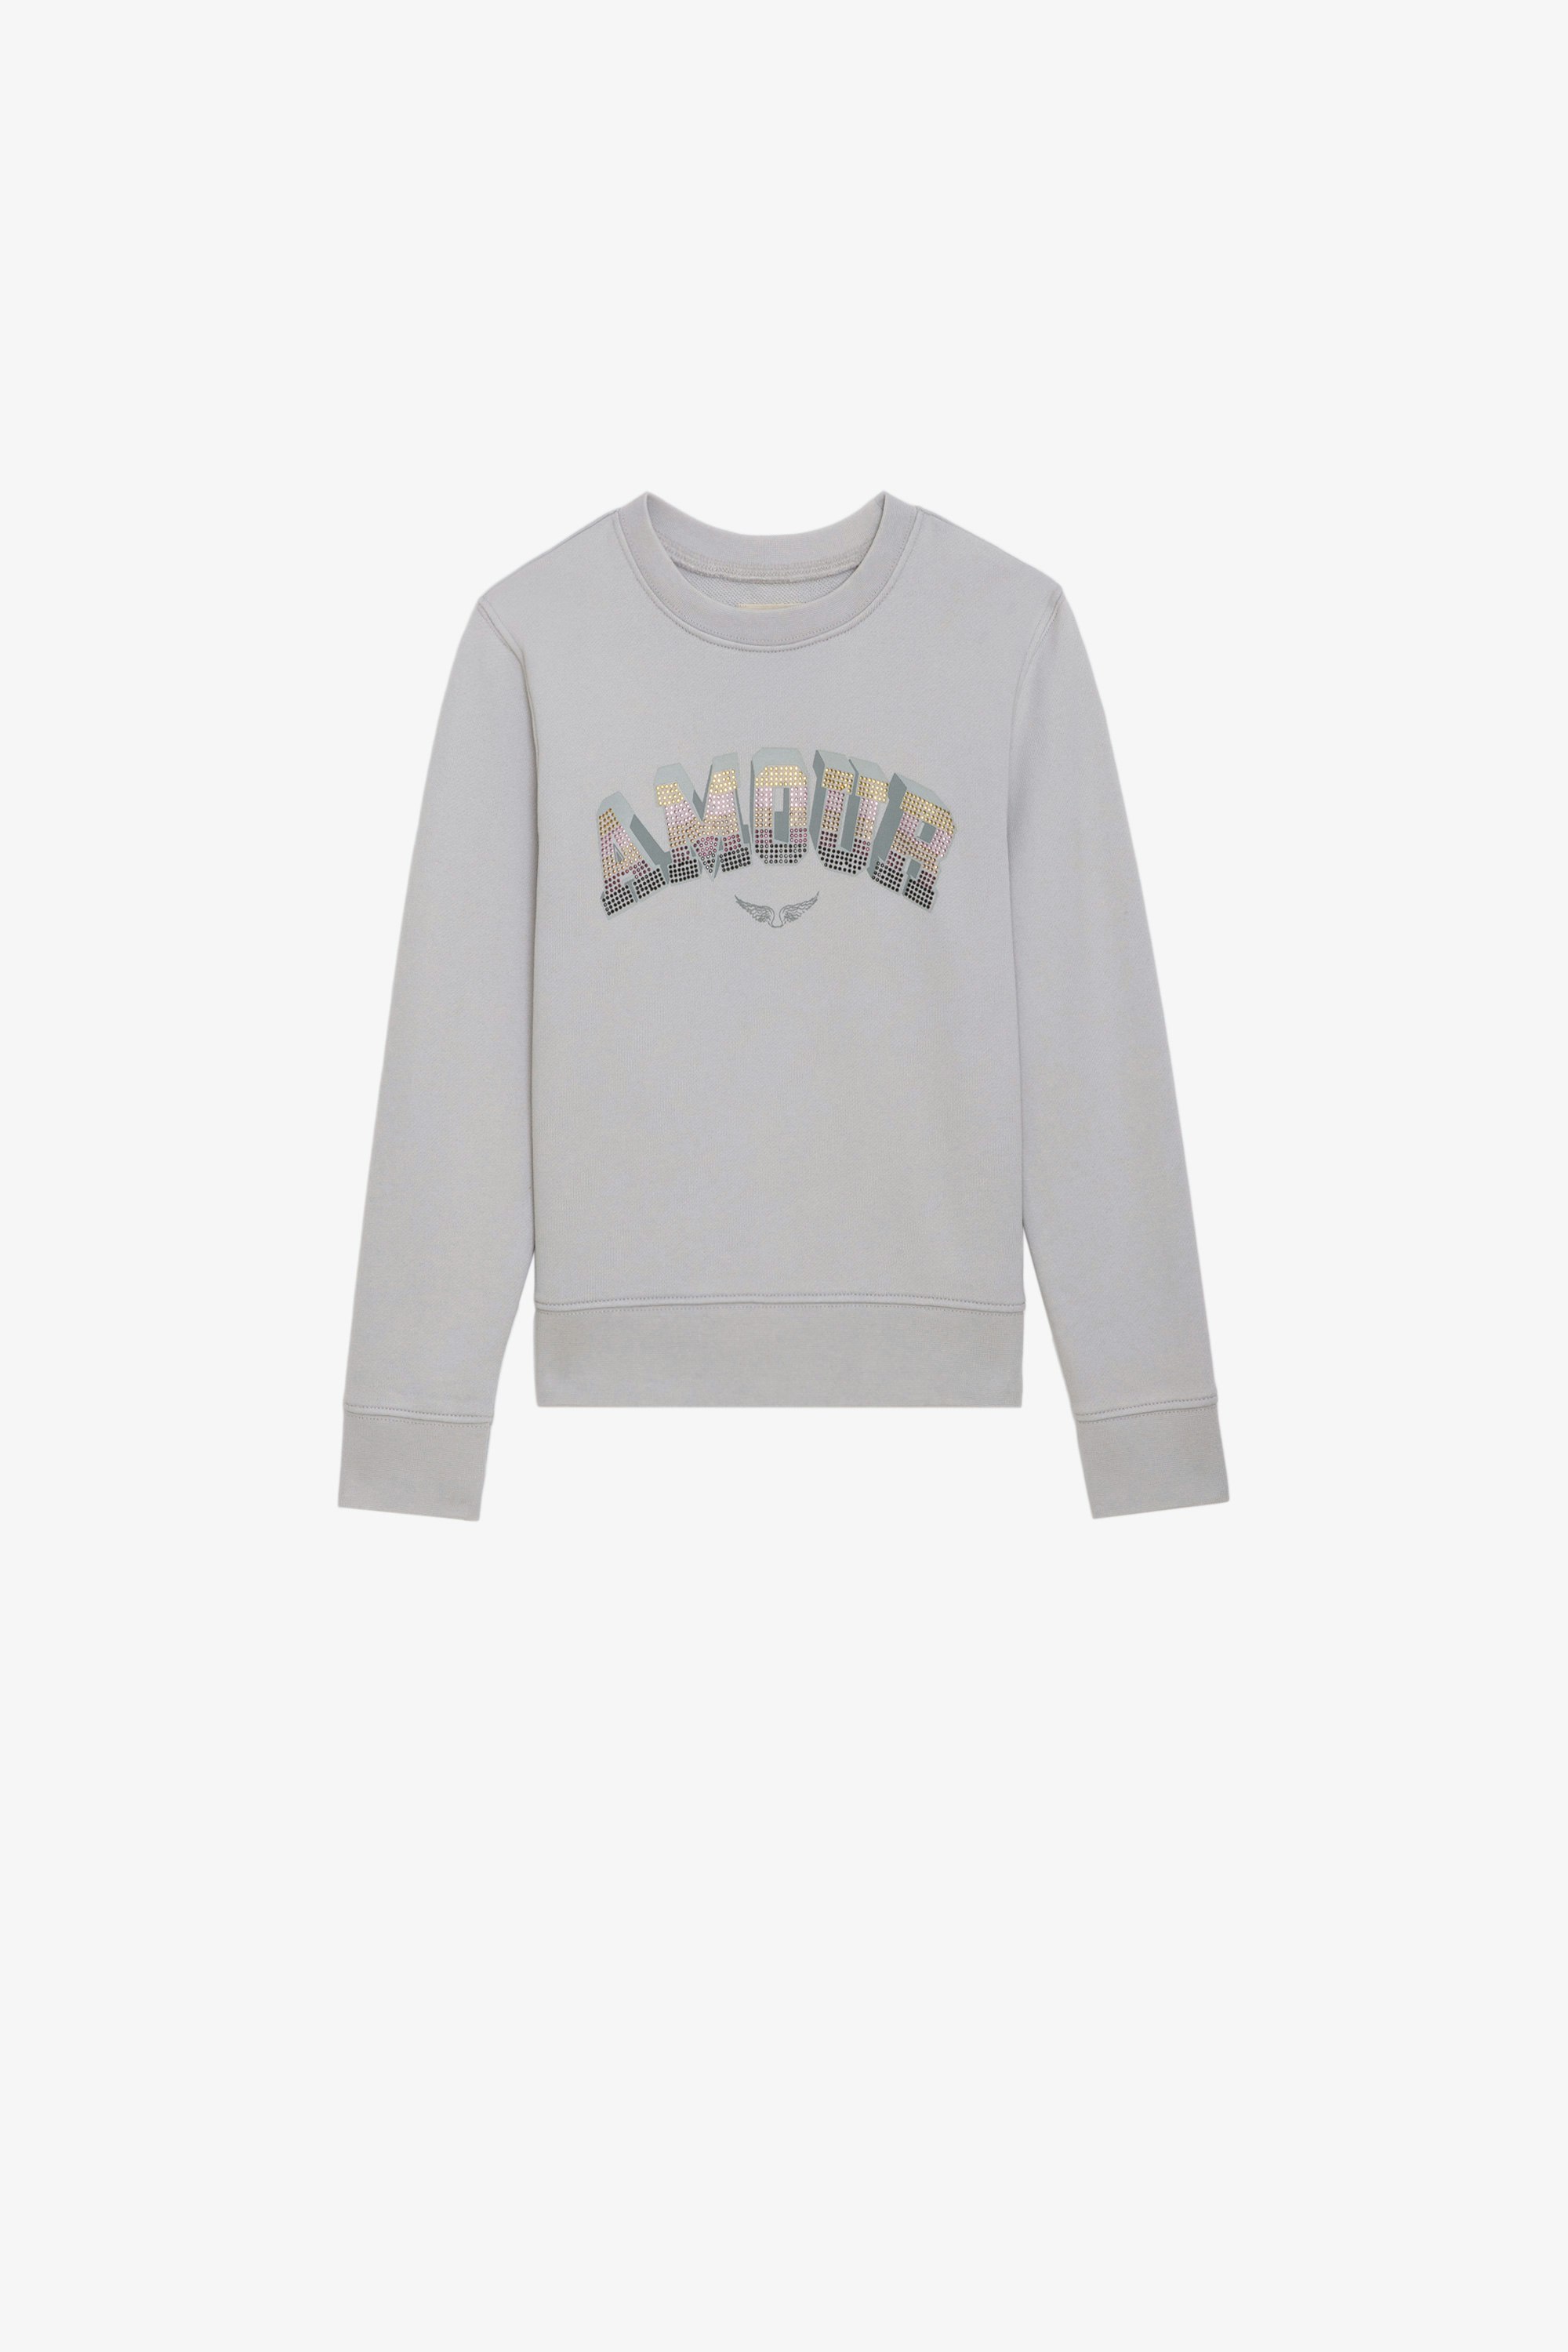 Hailey Girls’ Sweatshirt - Girls’ grey cotton fleece sweatshirt with diamanté “Amour” slogan.